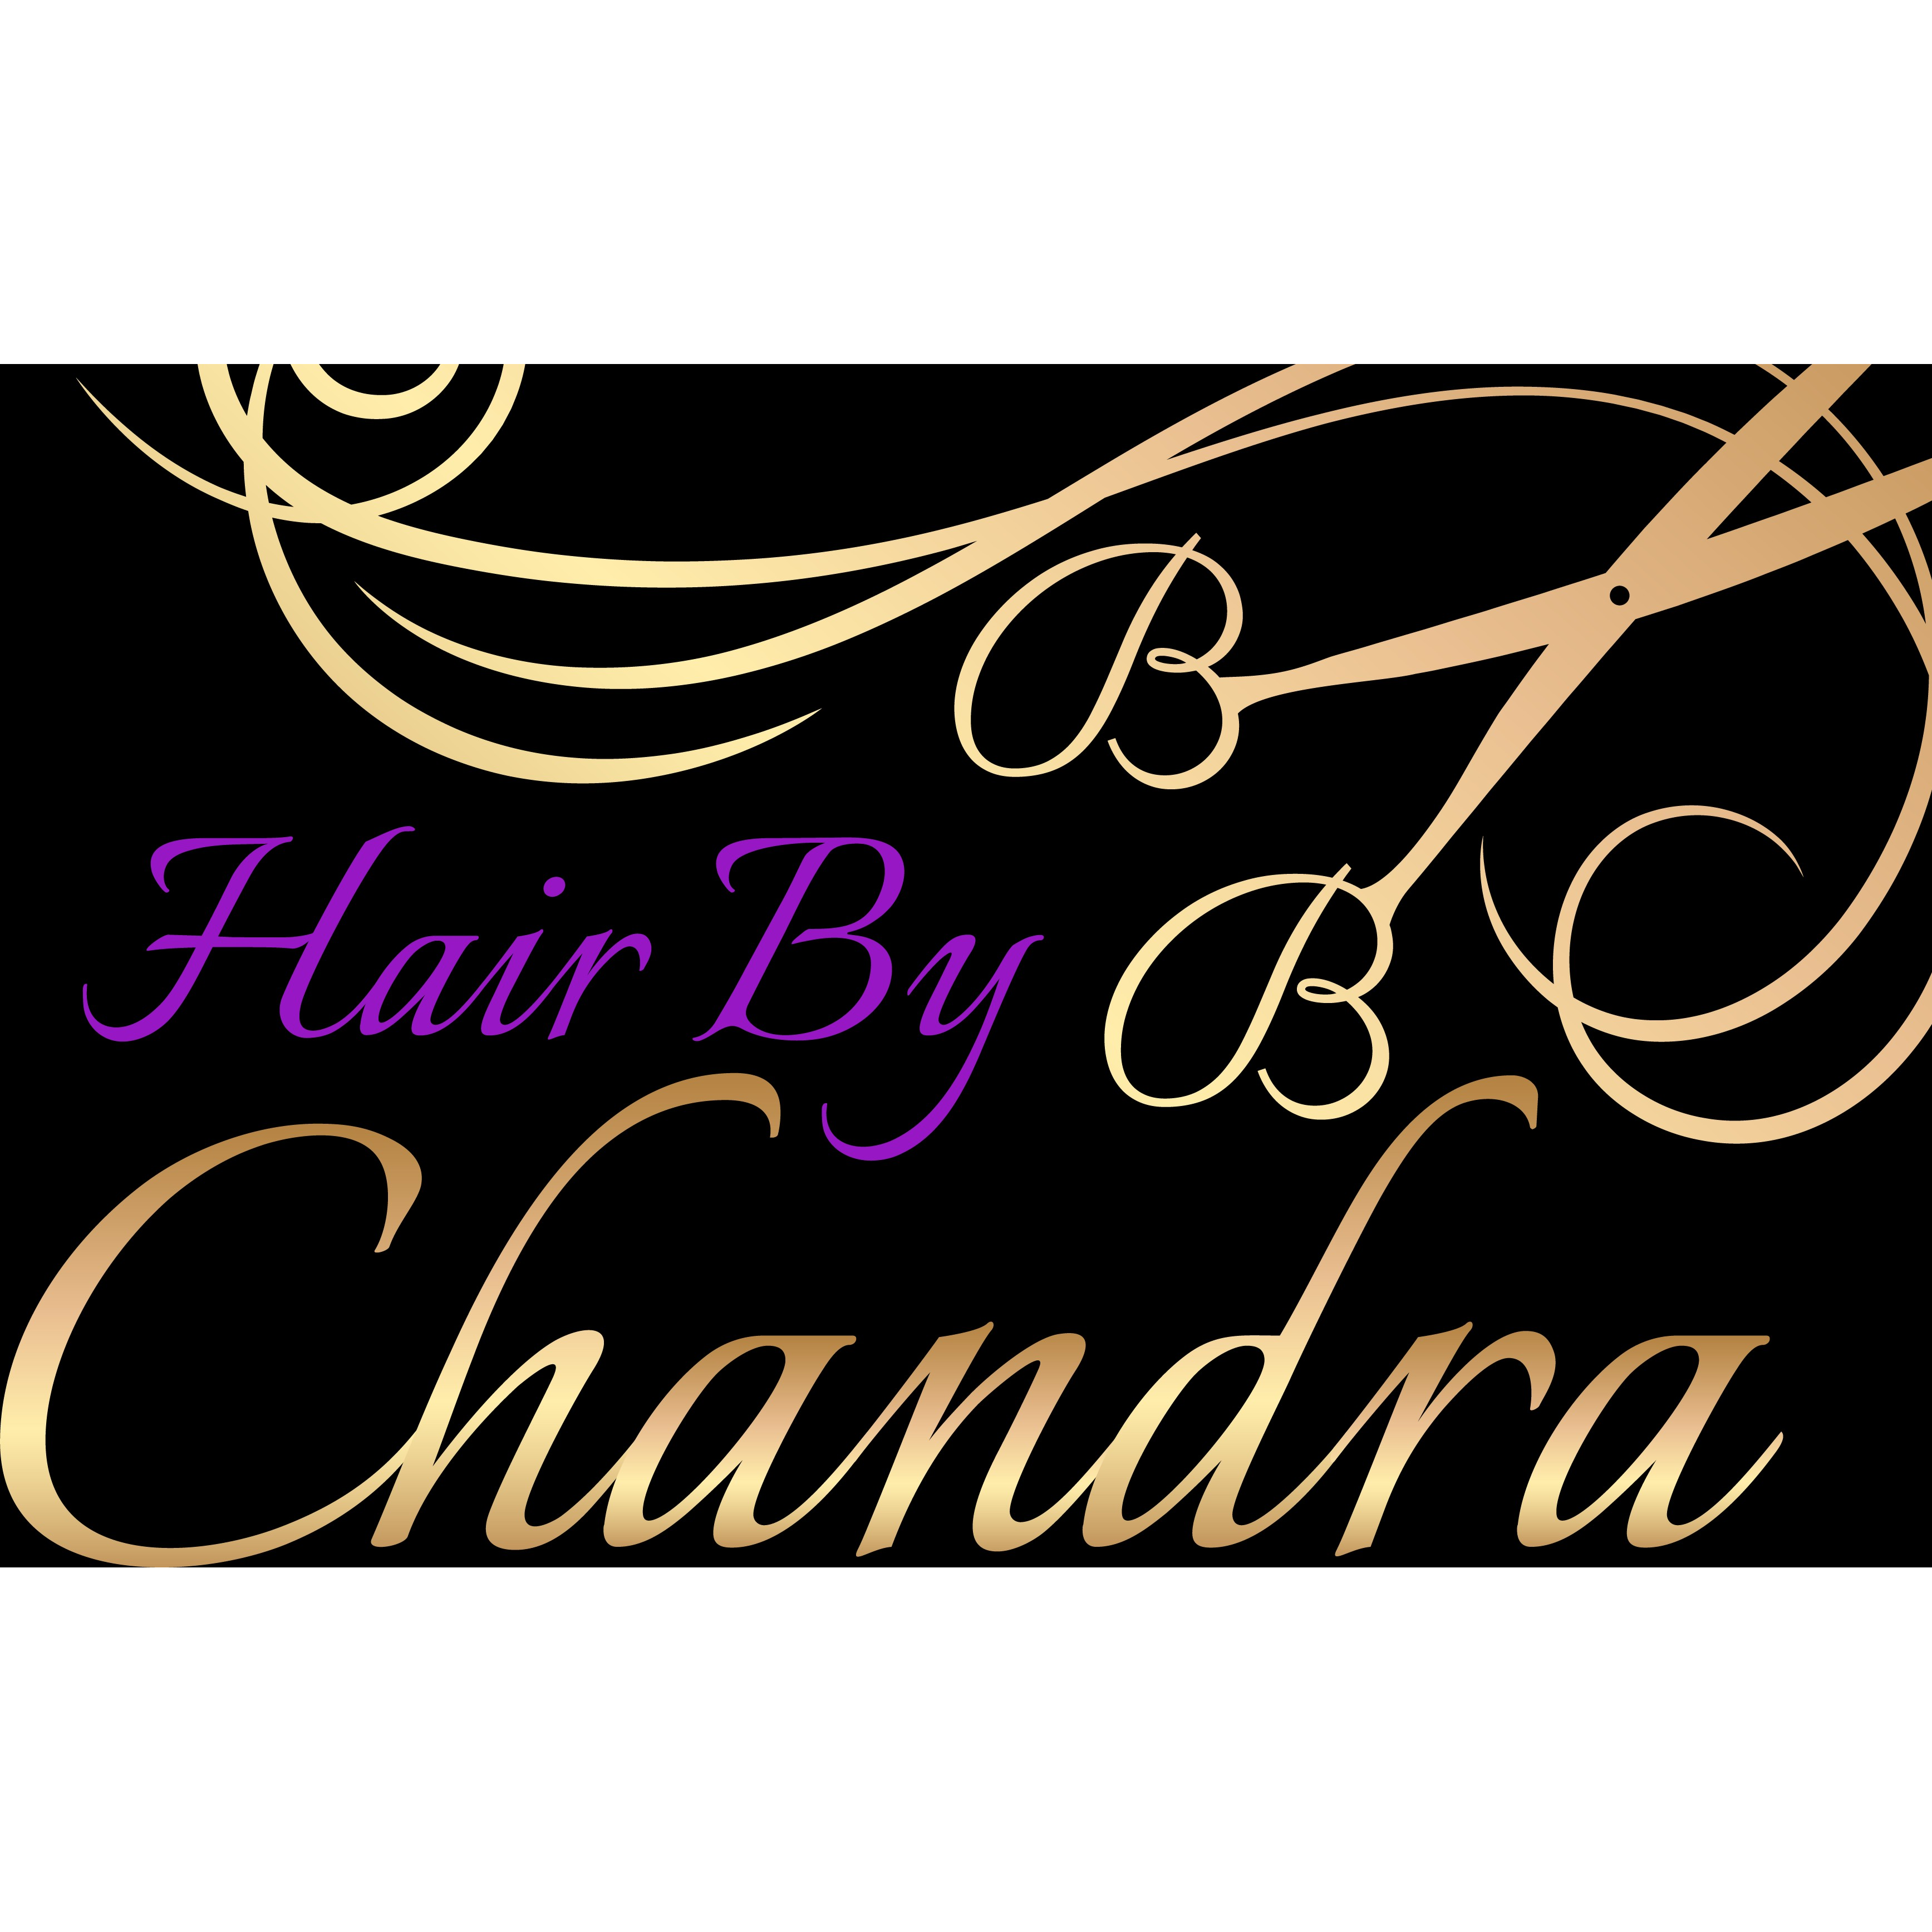 Hair by Chandra at Blue Lion Salon Studios